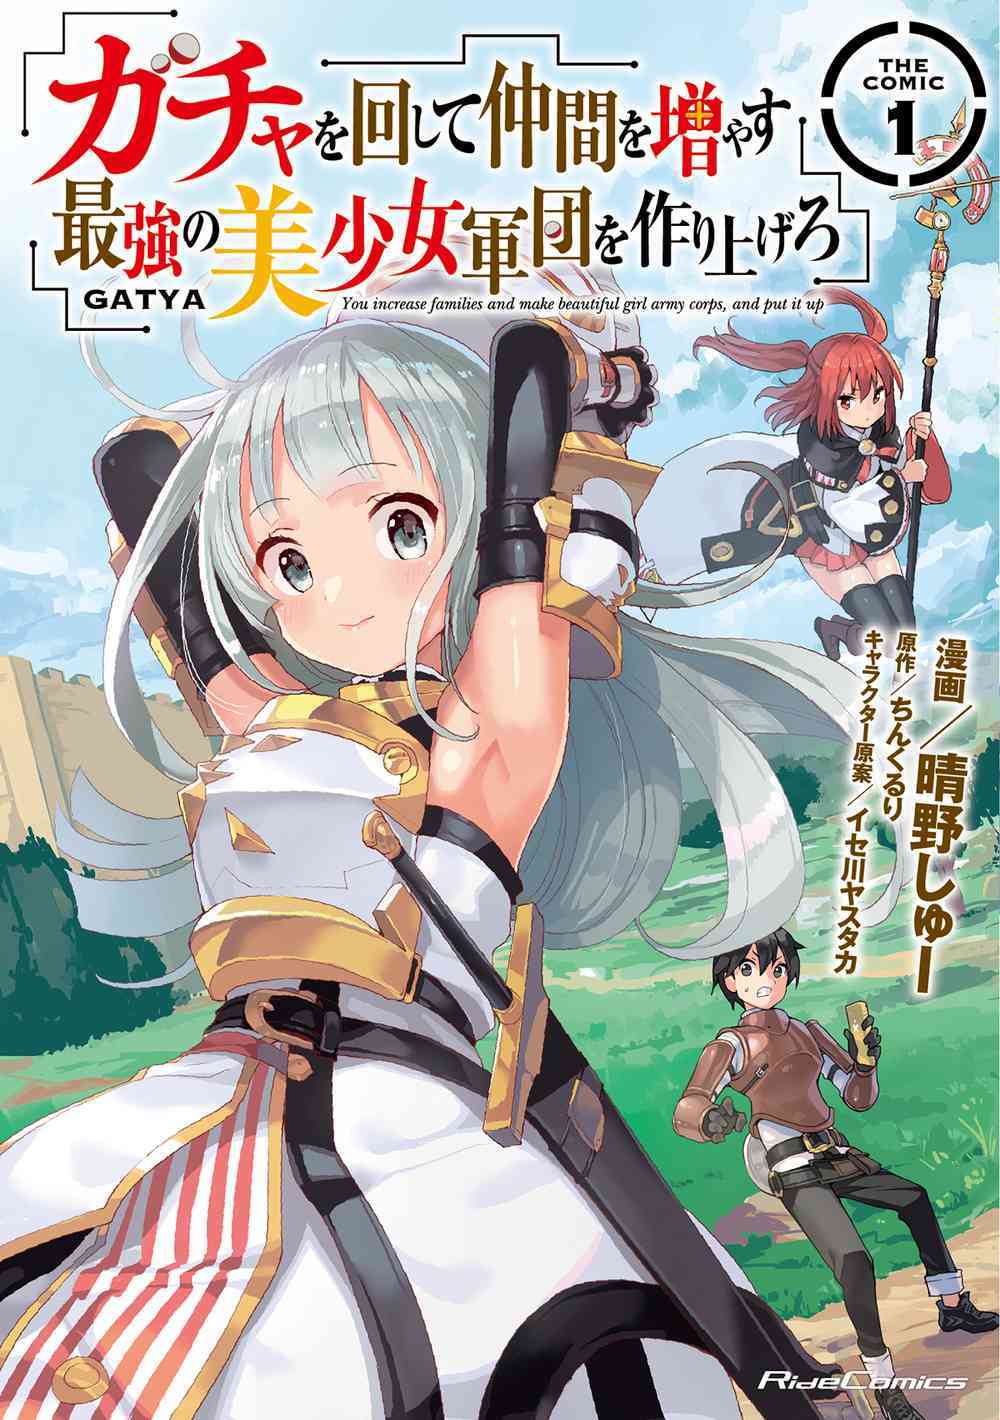 Youjo Senki (The Military Chronicles of a Little Girl) - Volume 1 a 12 -  MangAnime - Download baixar Mangás e HQs em Kindle .mobi e outros formatos  .pdf mangás para kindle